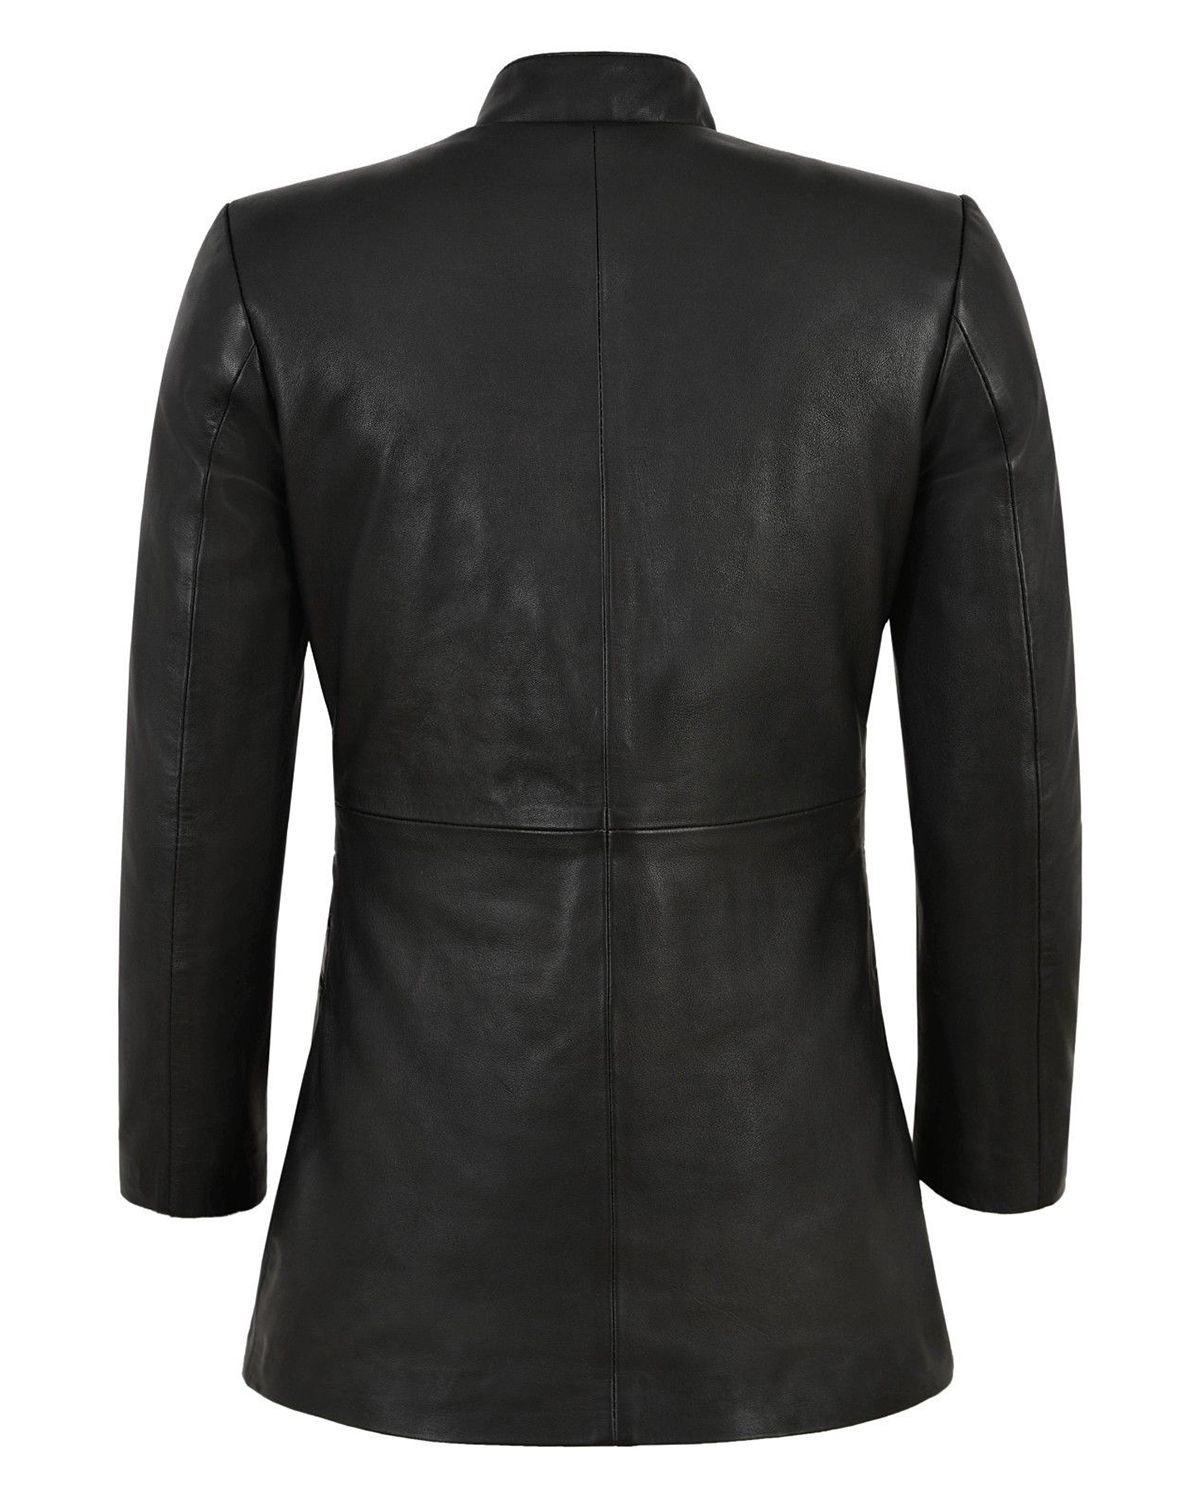 MotorCycleJackets Women's 3/4 Black Real Leather Jacket